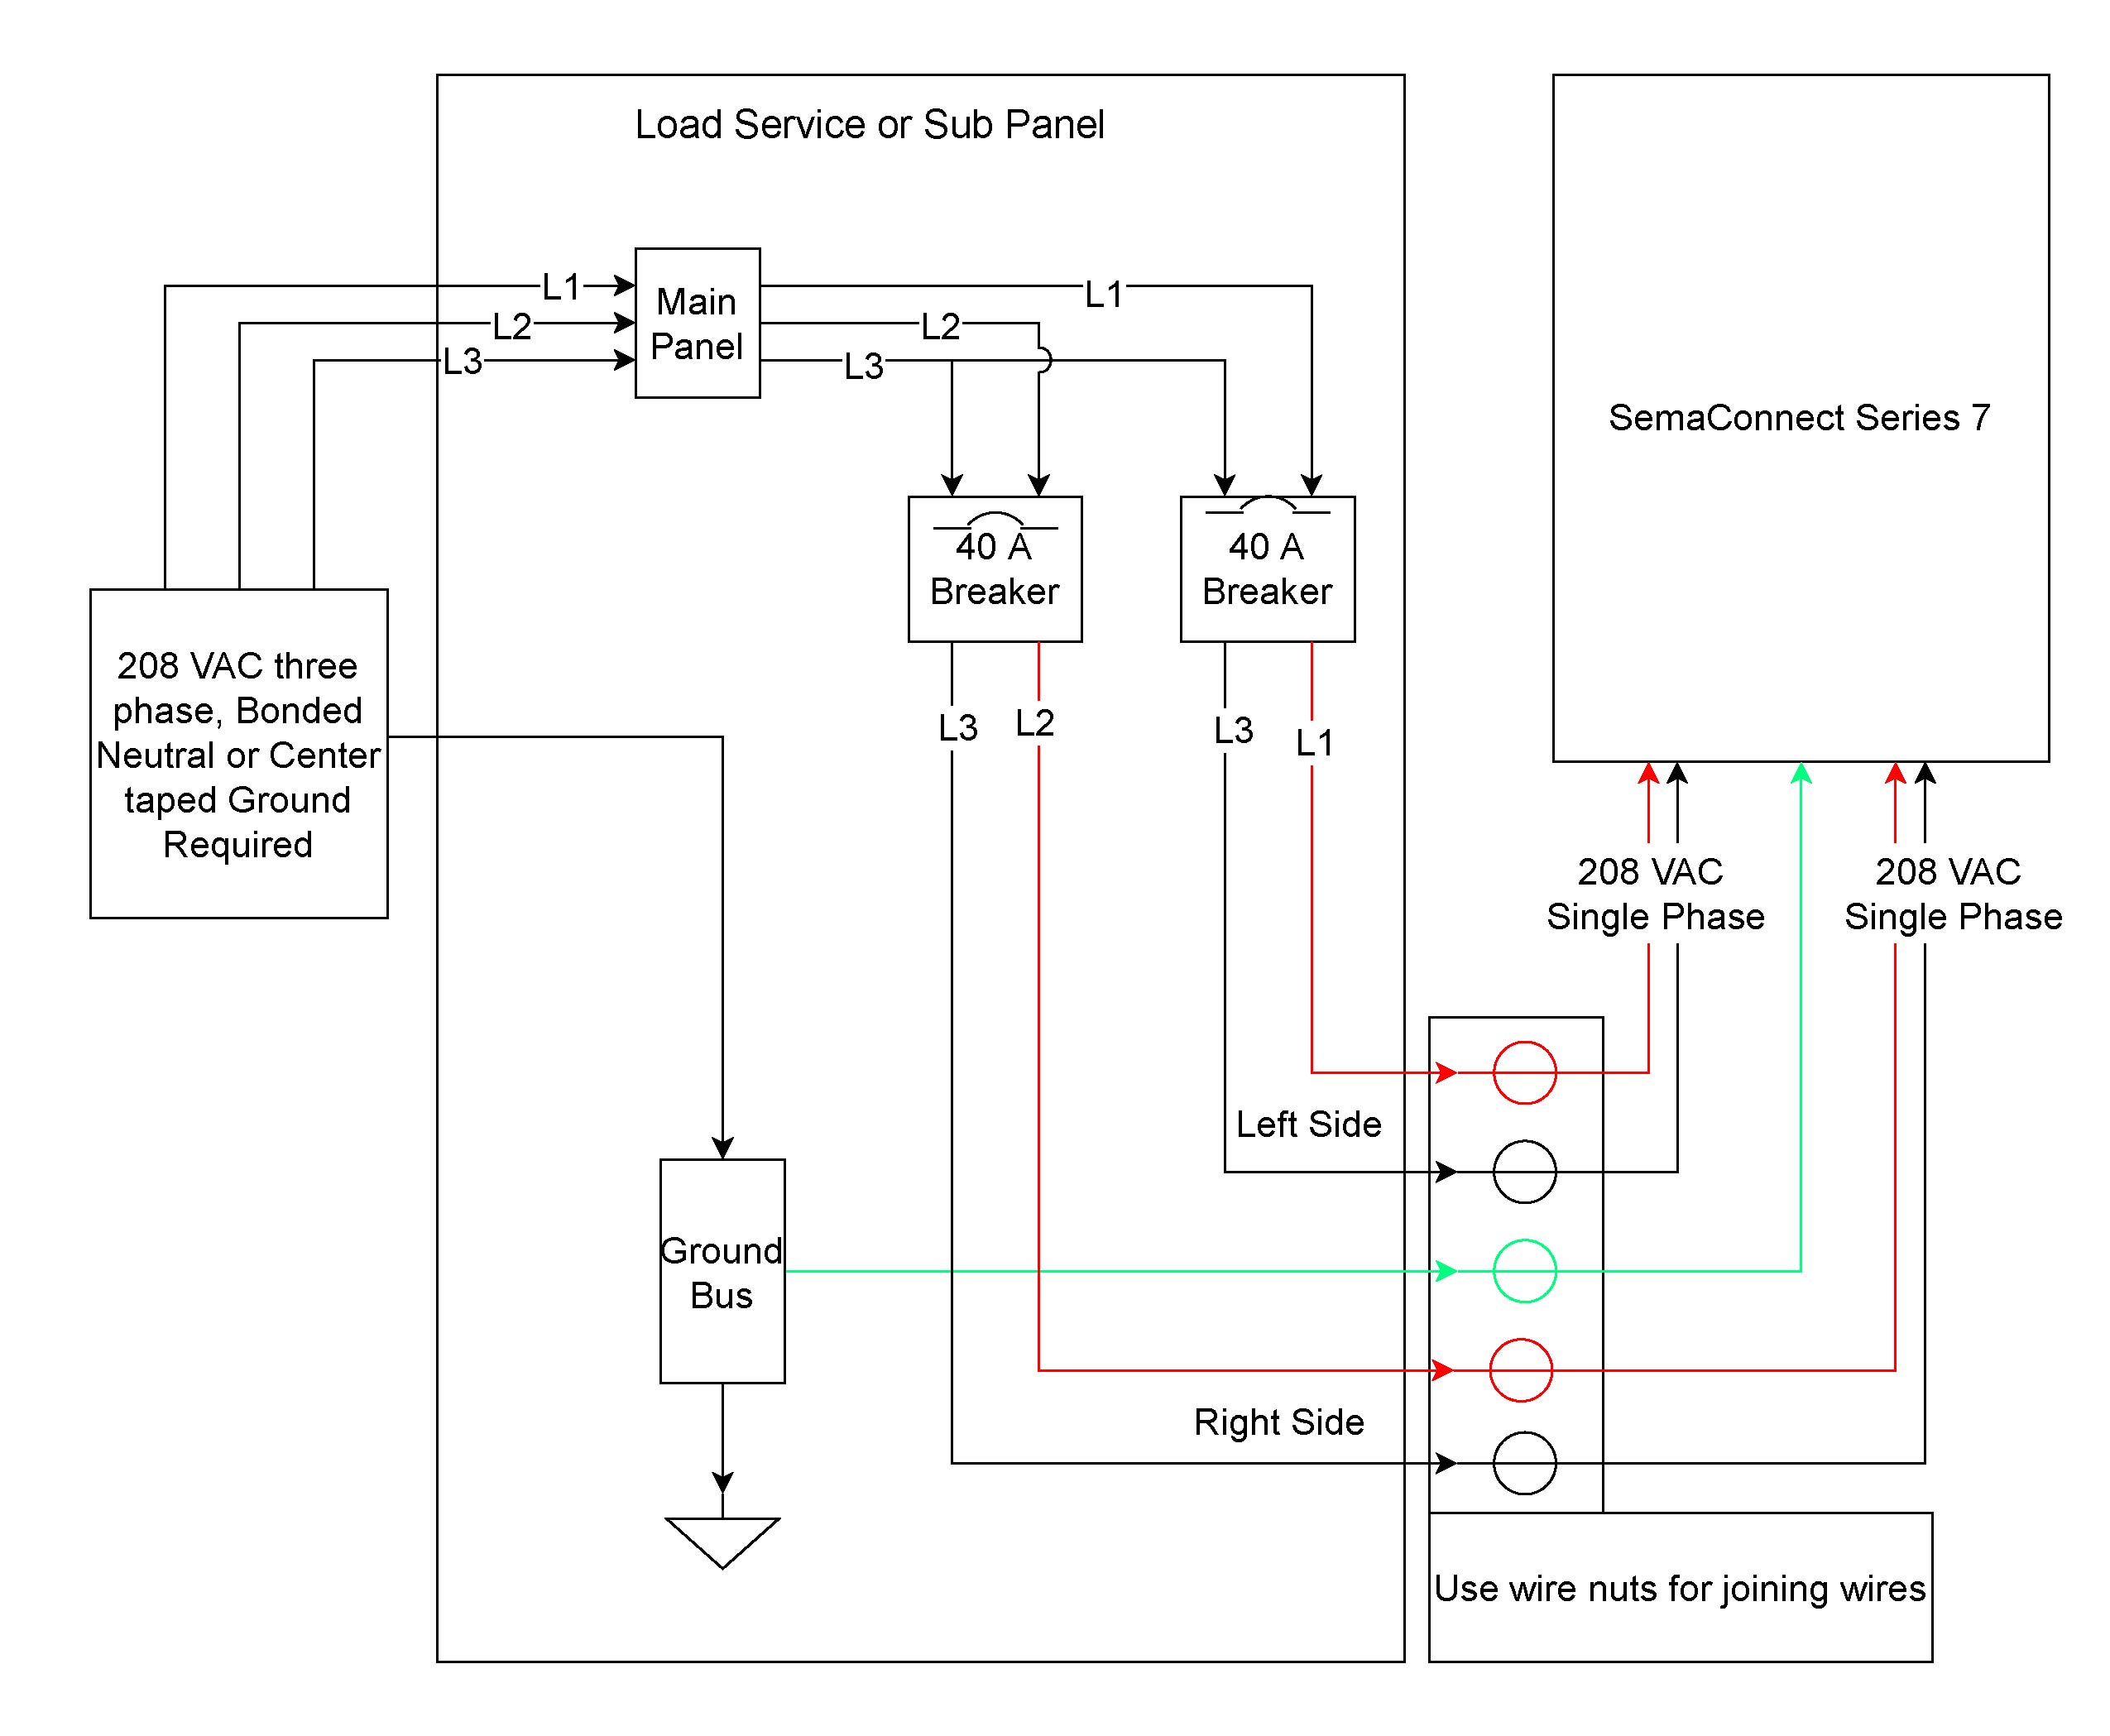 2110703 generator control panel wiring diagram